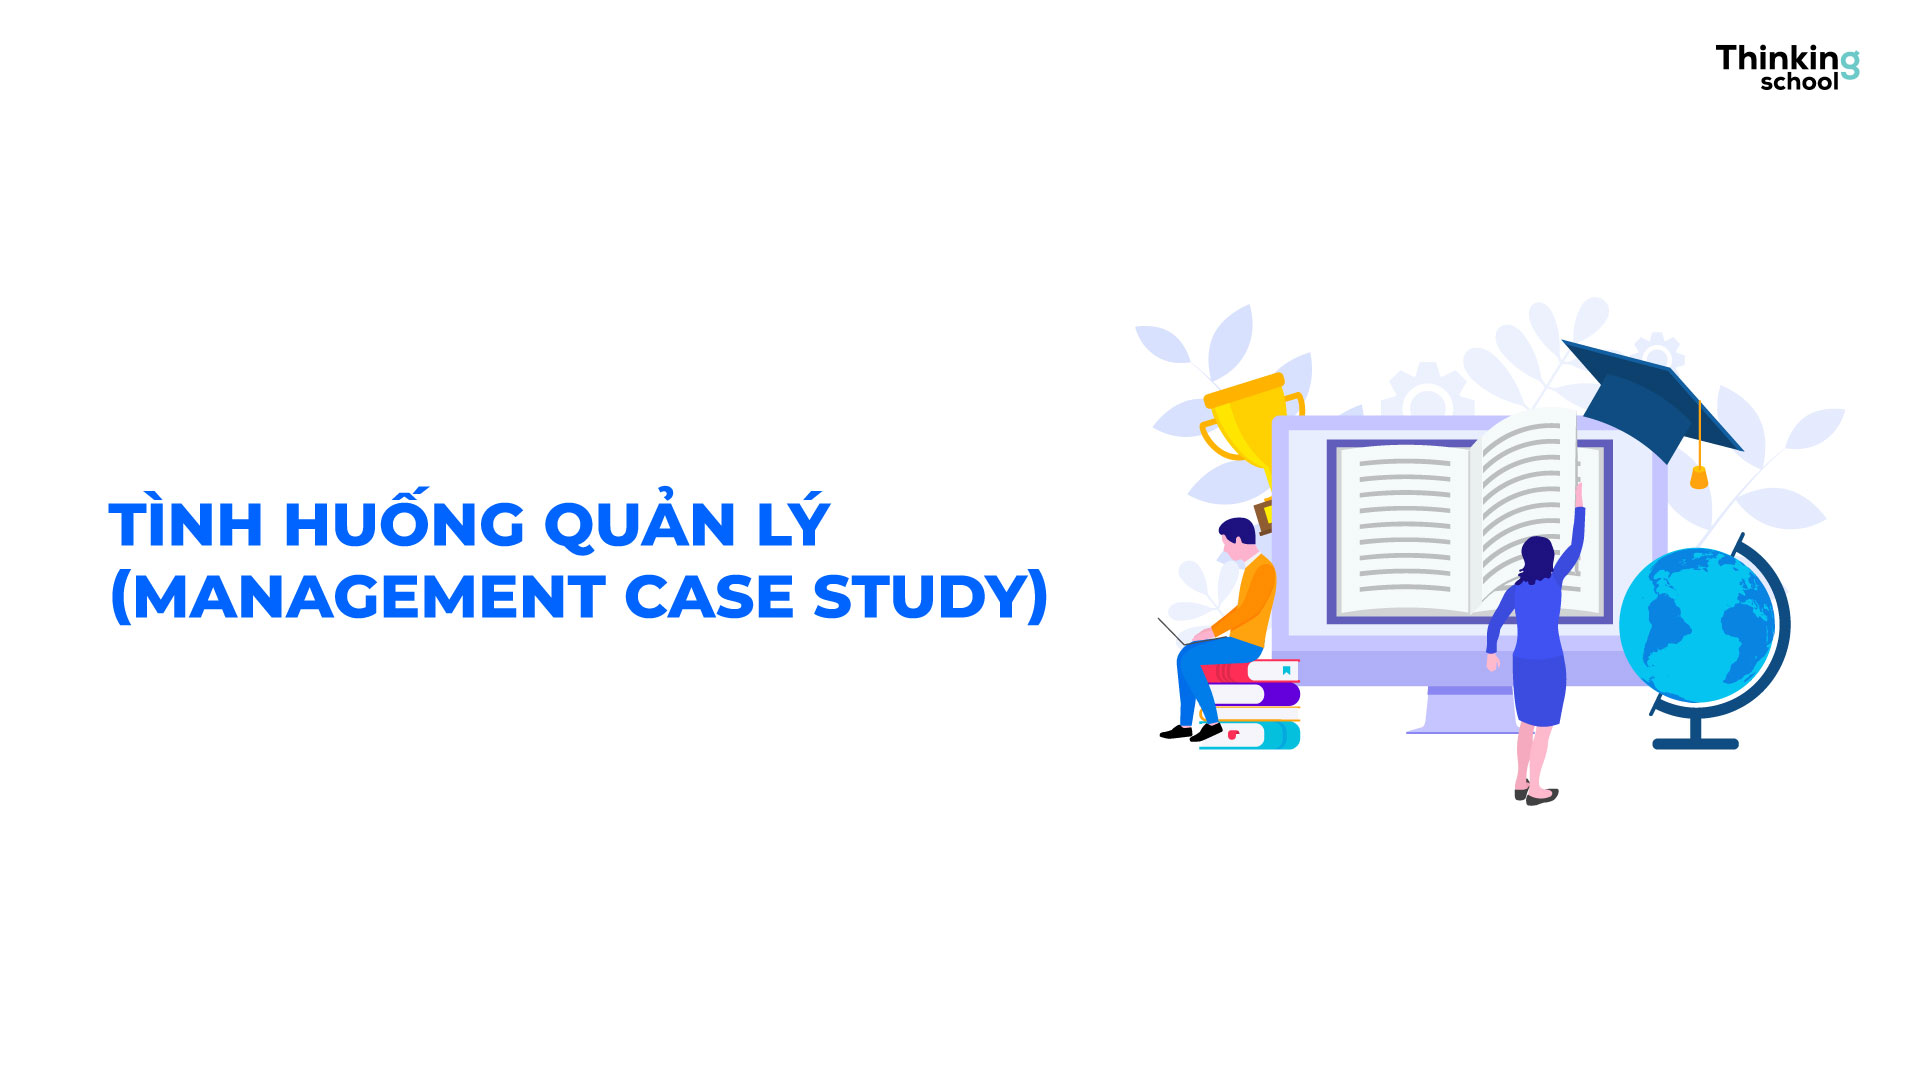 TINH HUONG QUAN LY MANAGEMENT CASE STUDY